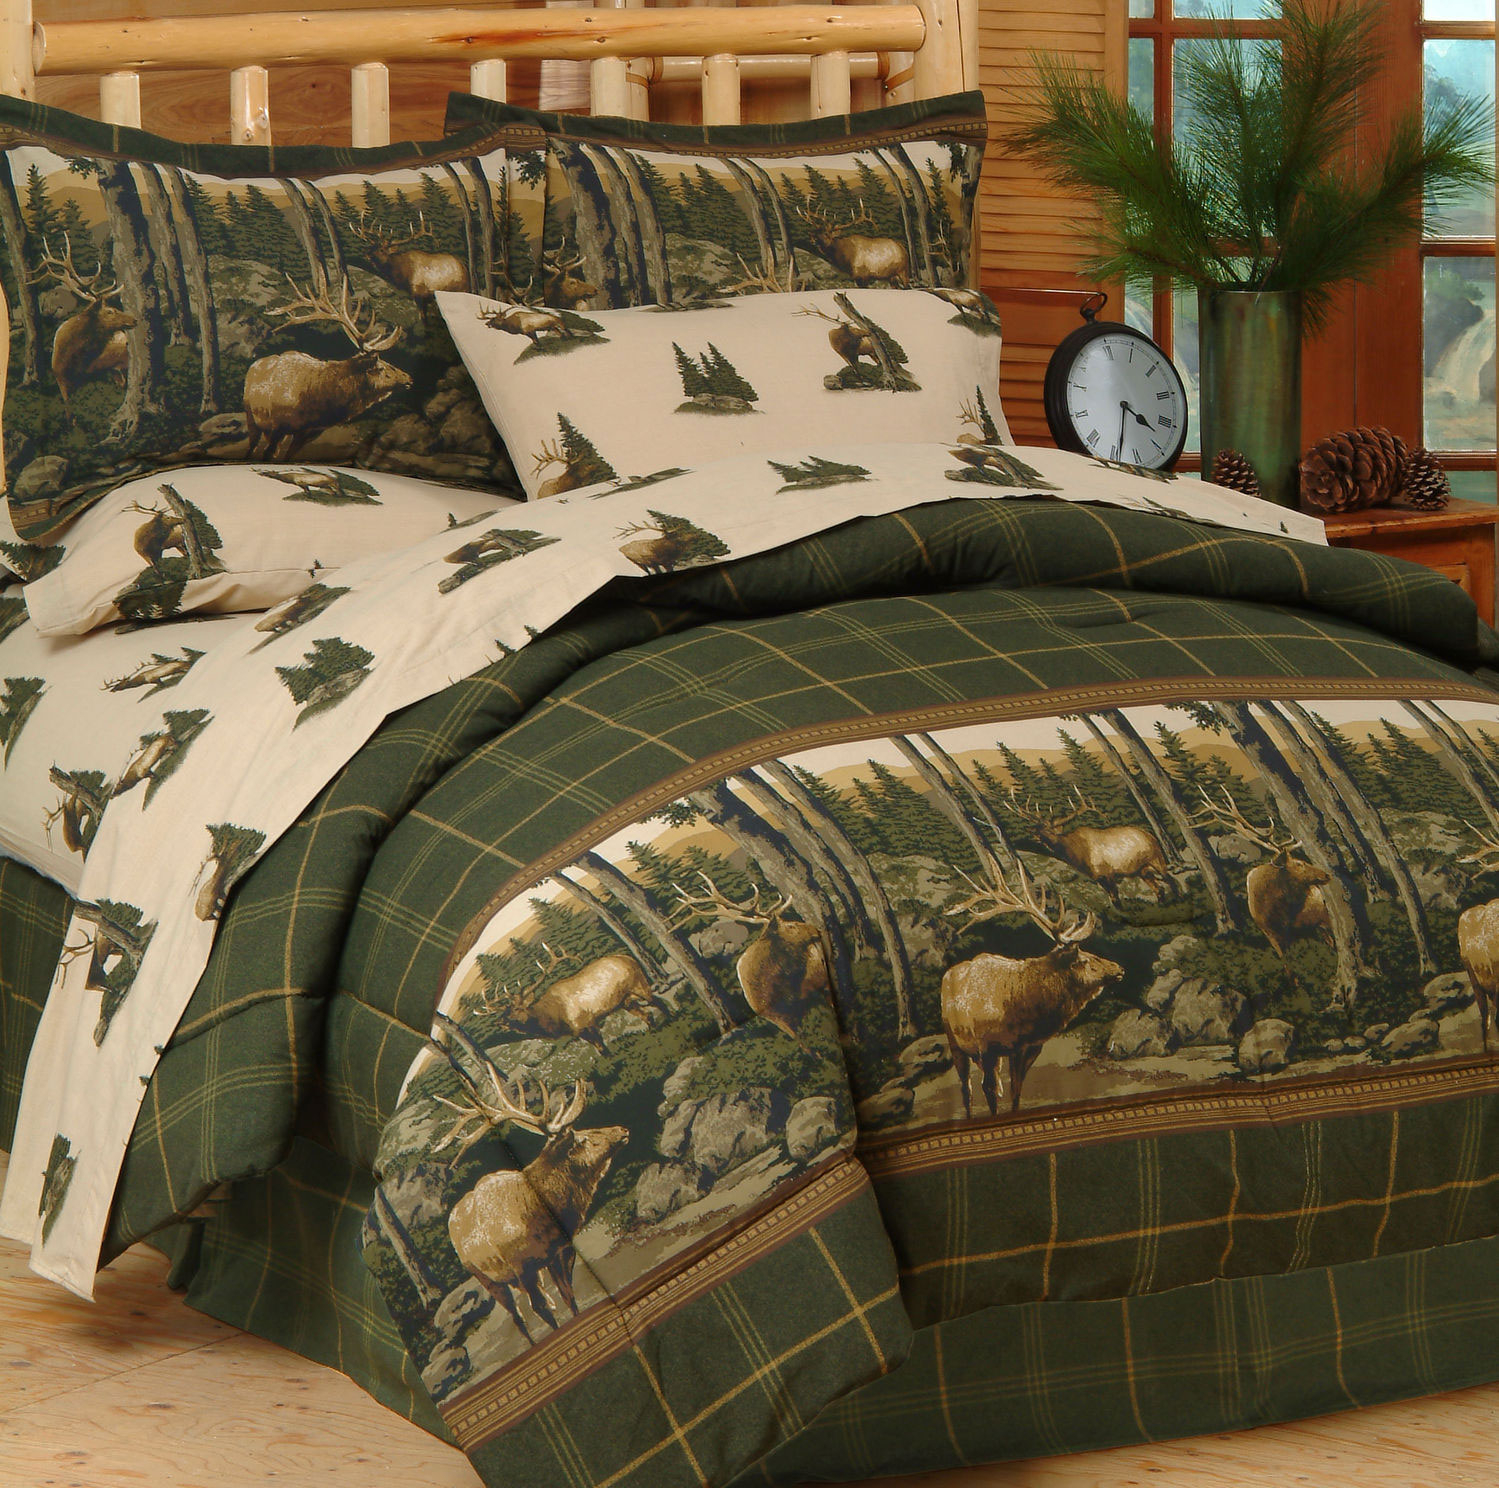 Wildlife comforter sets